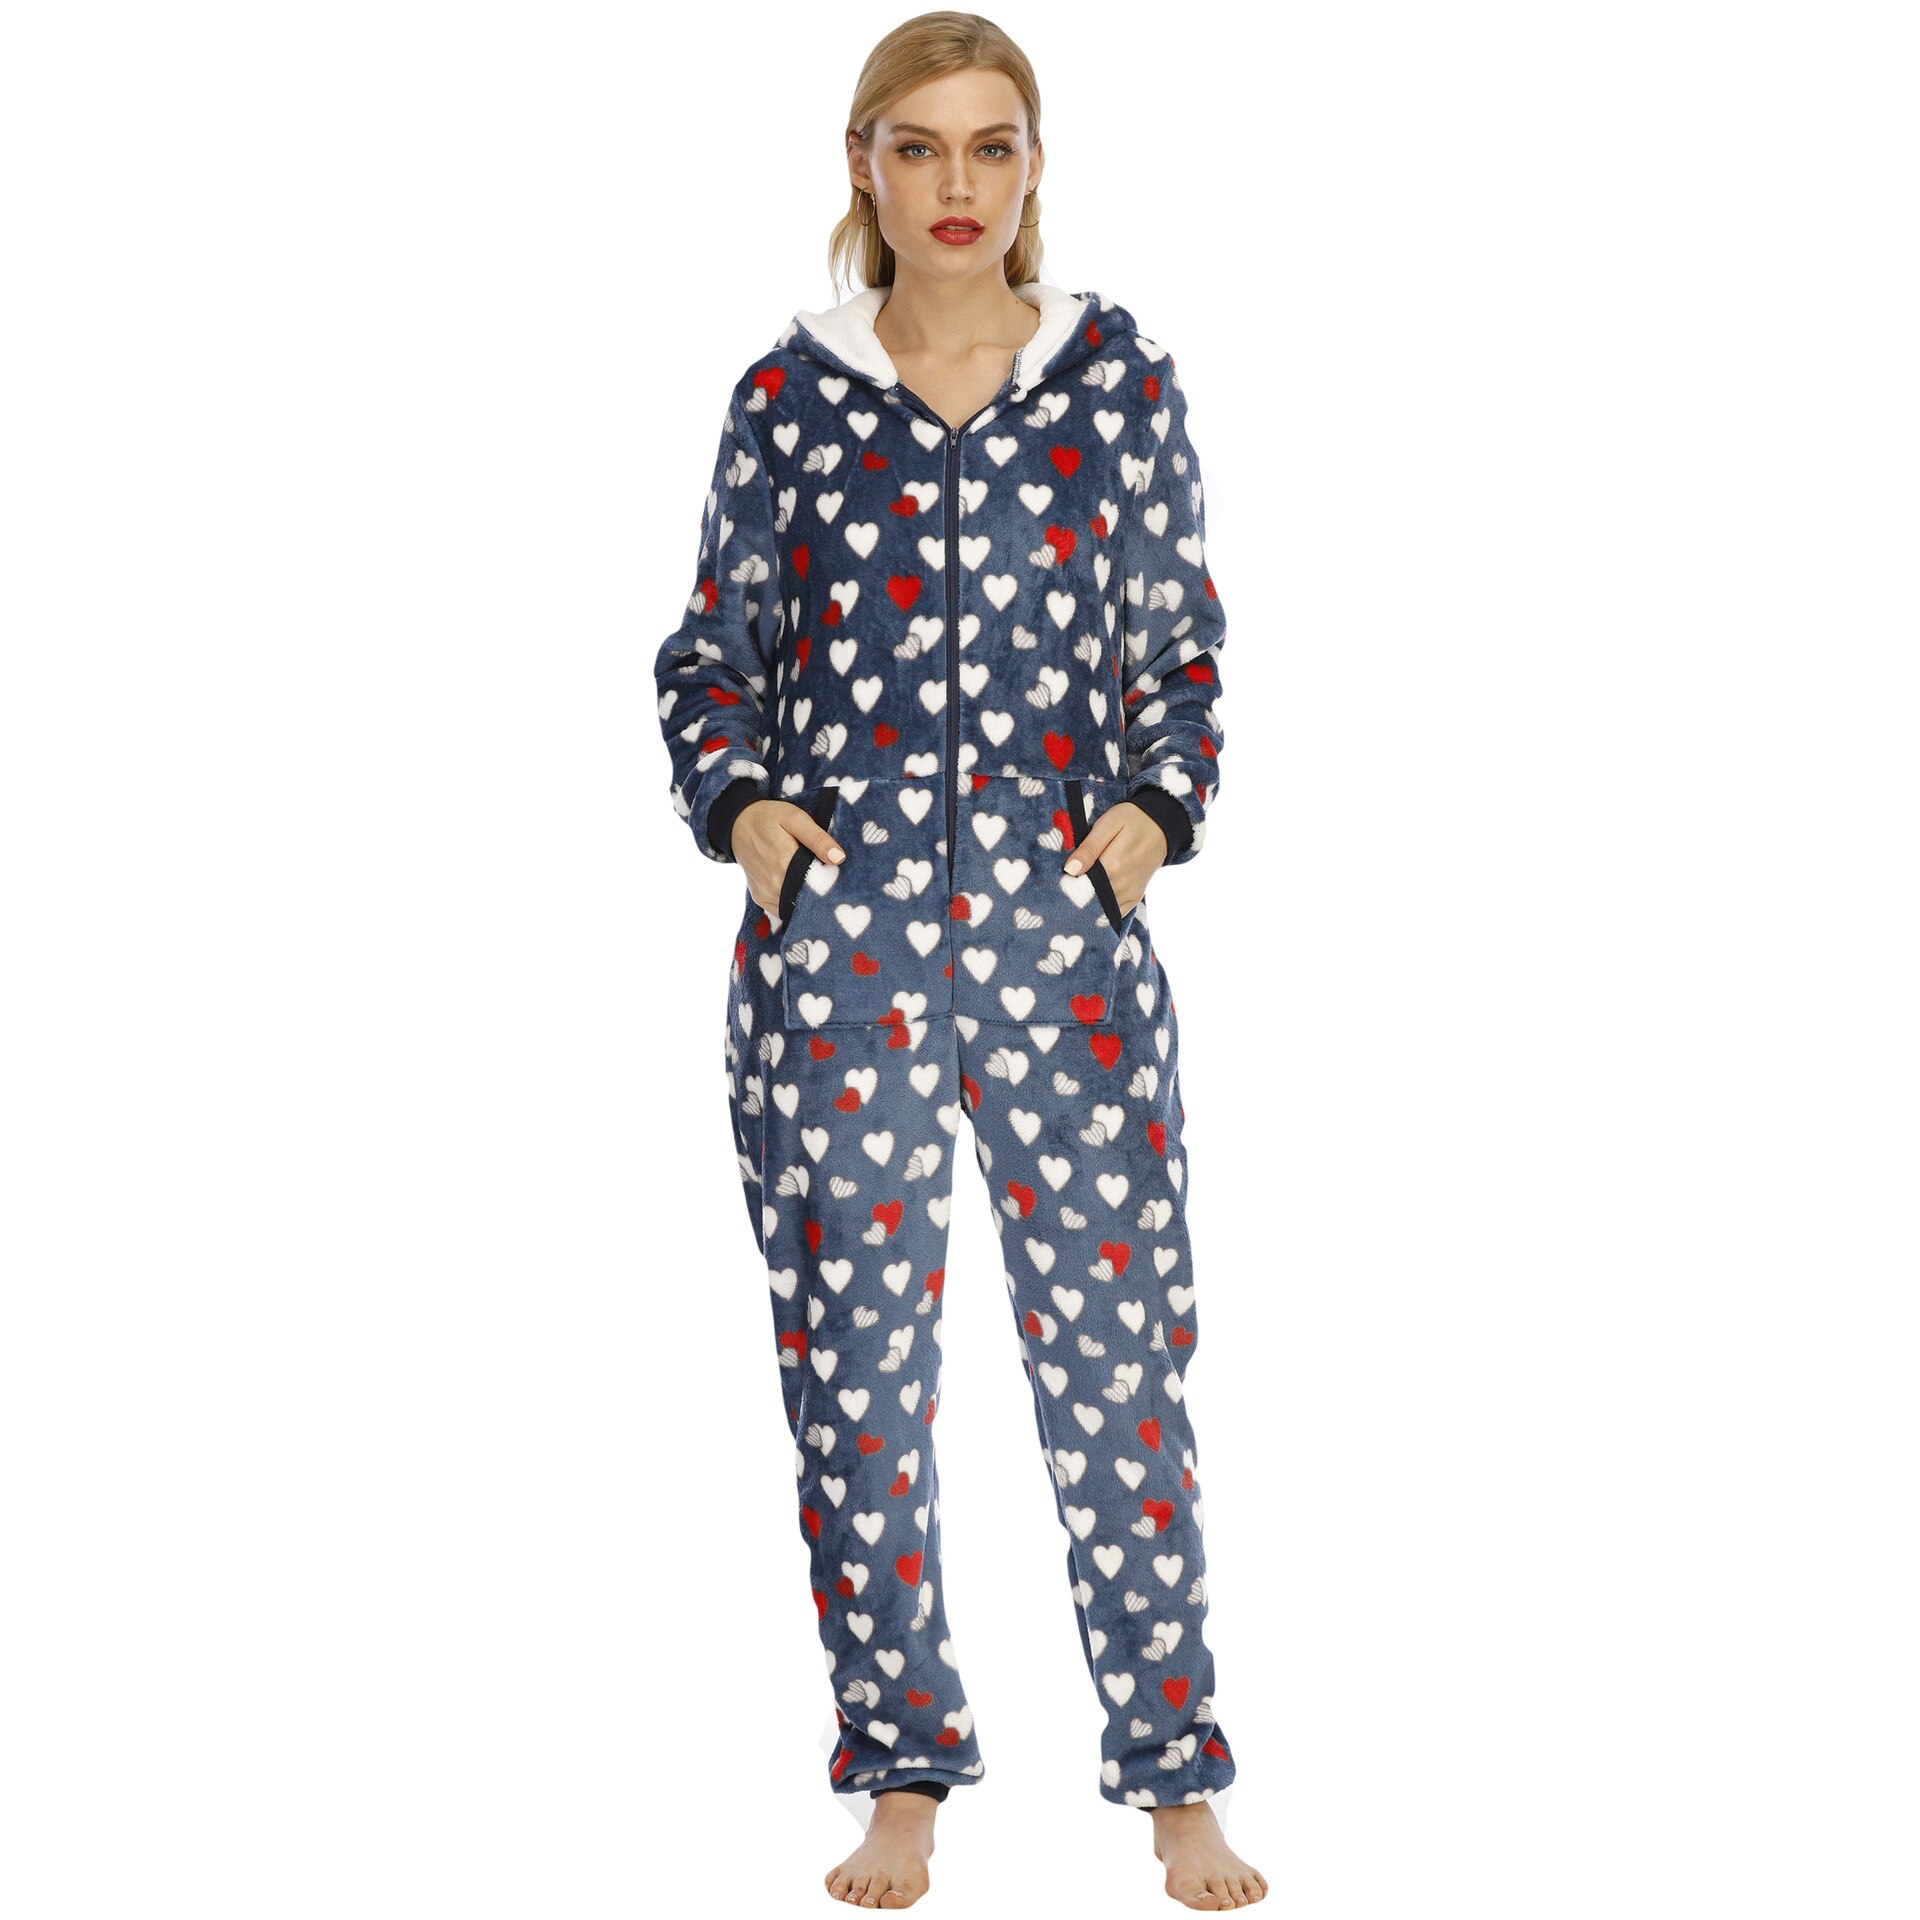 Flannel Women Pajamas Cute Ears Hooded Jumpsuit Plush Onesie Sleepwear Love Print Nightwear Zipper Full Sleeve Romper Nightgown